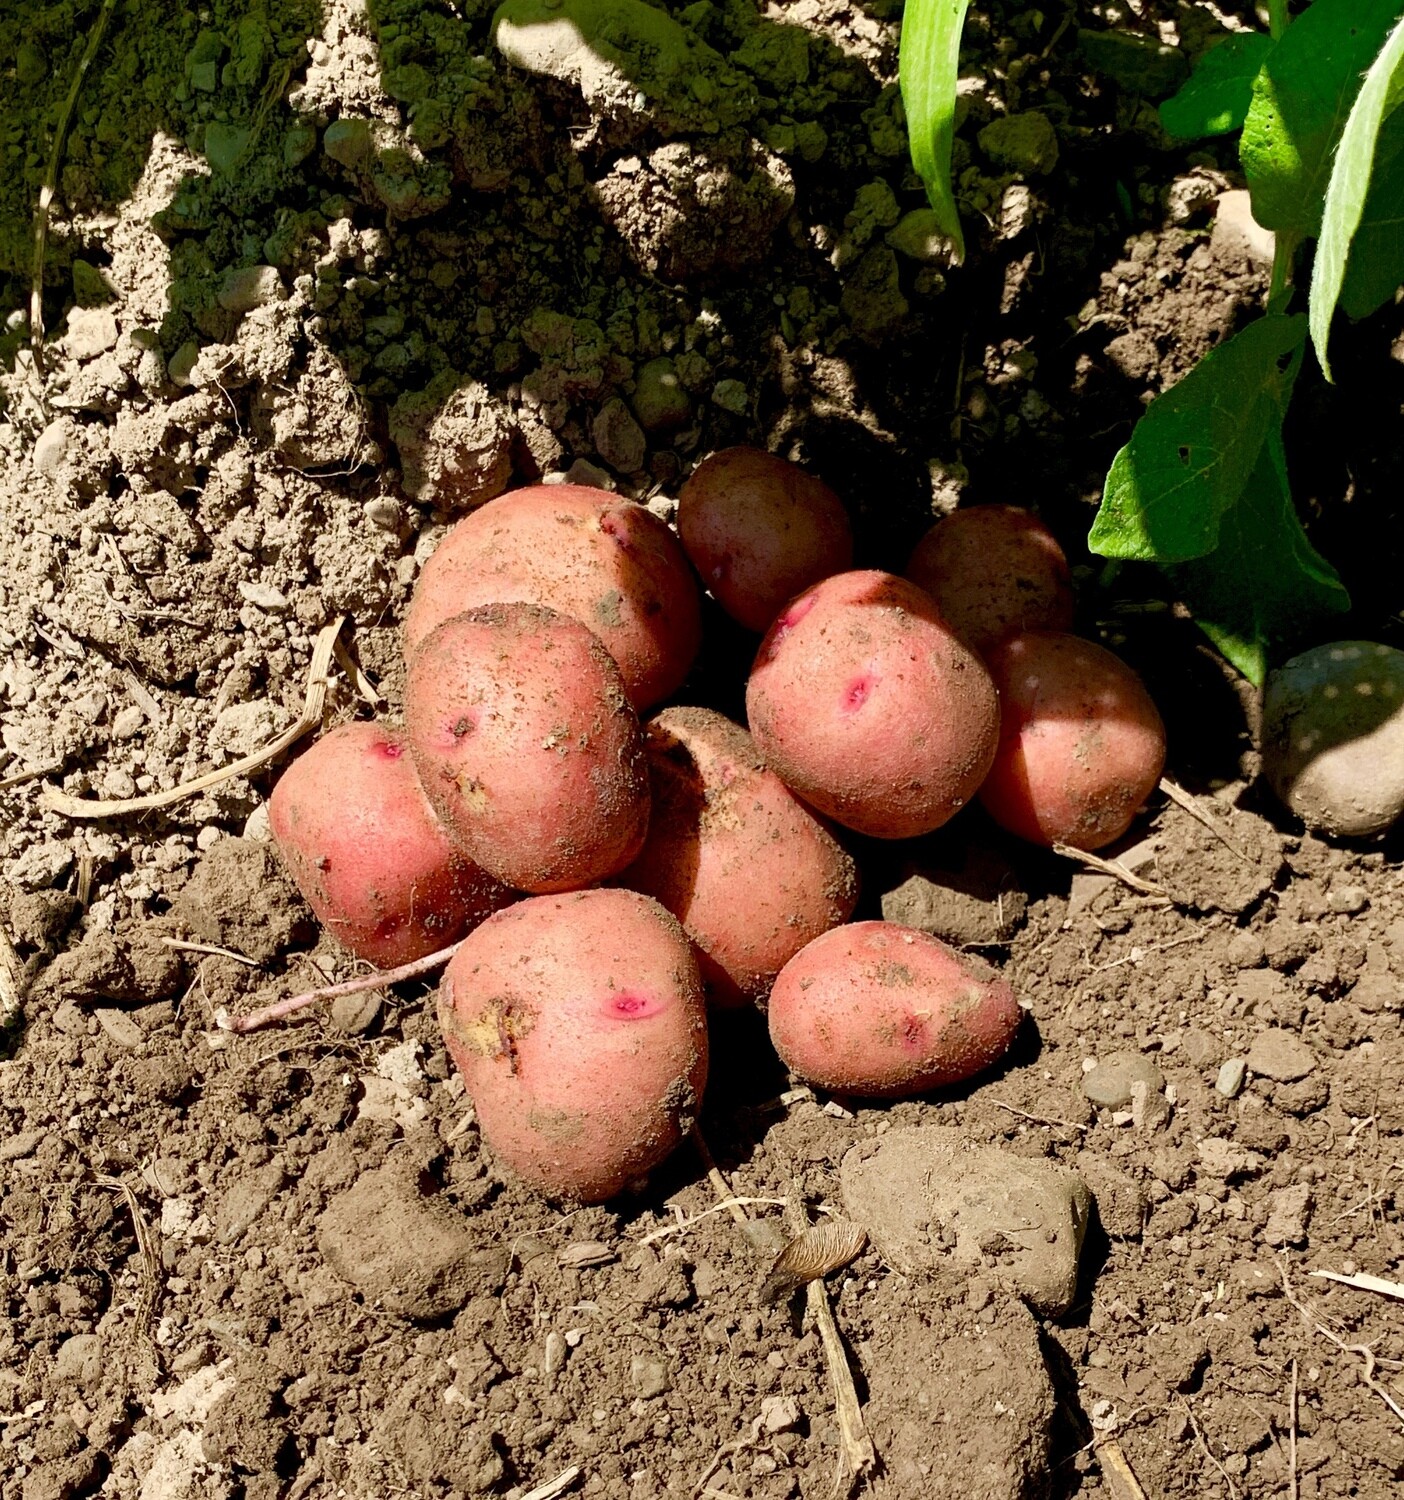 New Potatoes - ”Rose Gold” - 15 Lb